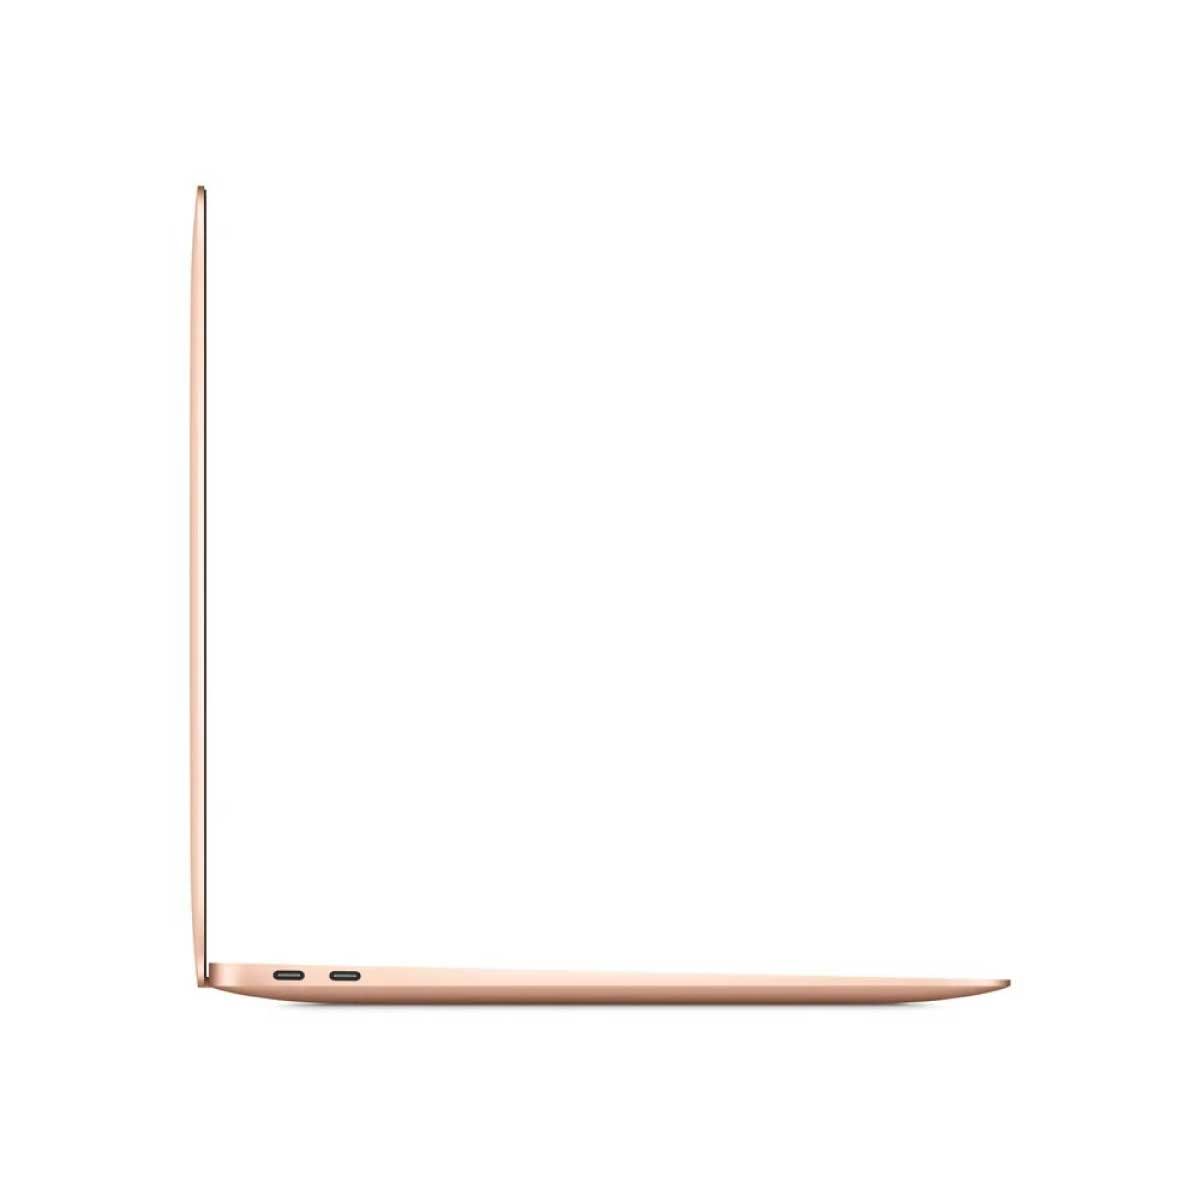 Apple MacBook Air (รุ่น 13 นิ้ว, ชิป M1) 256GB Gold